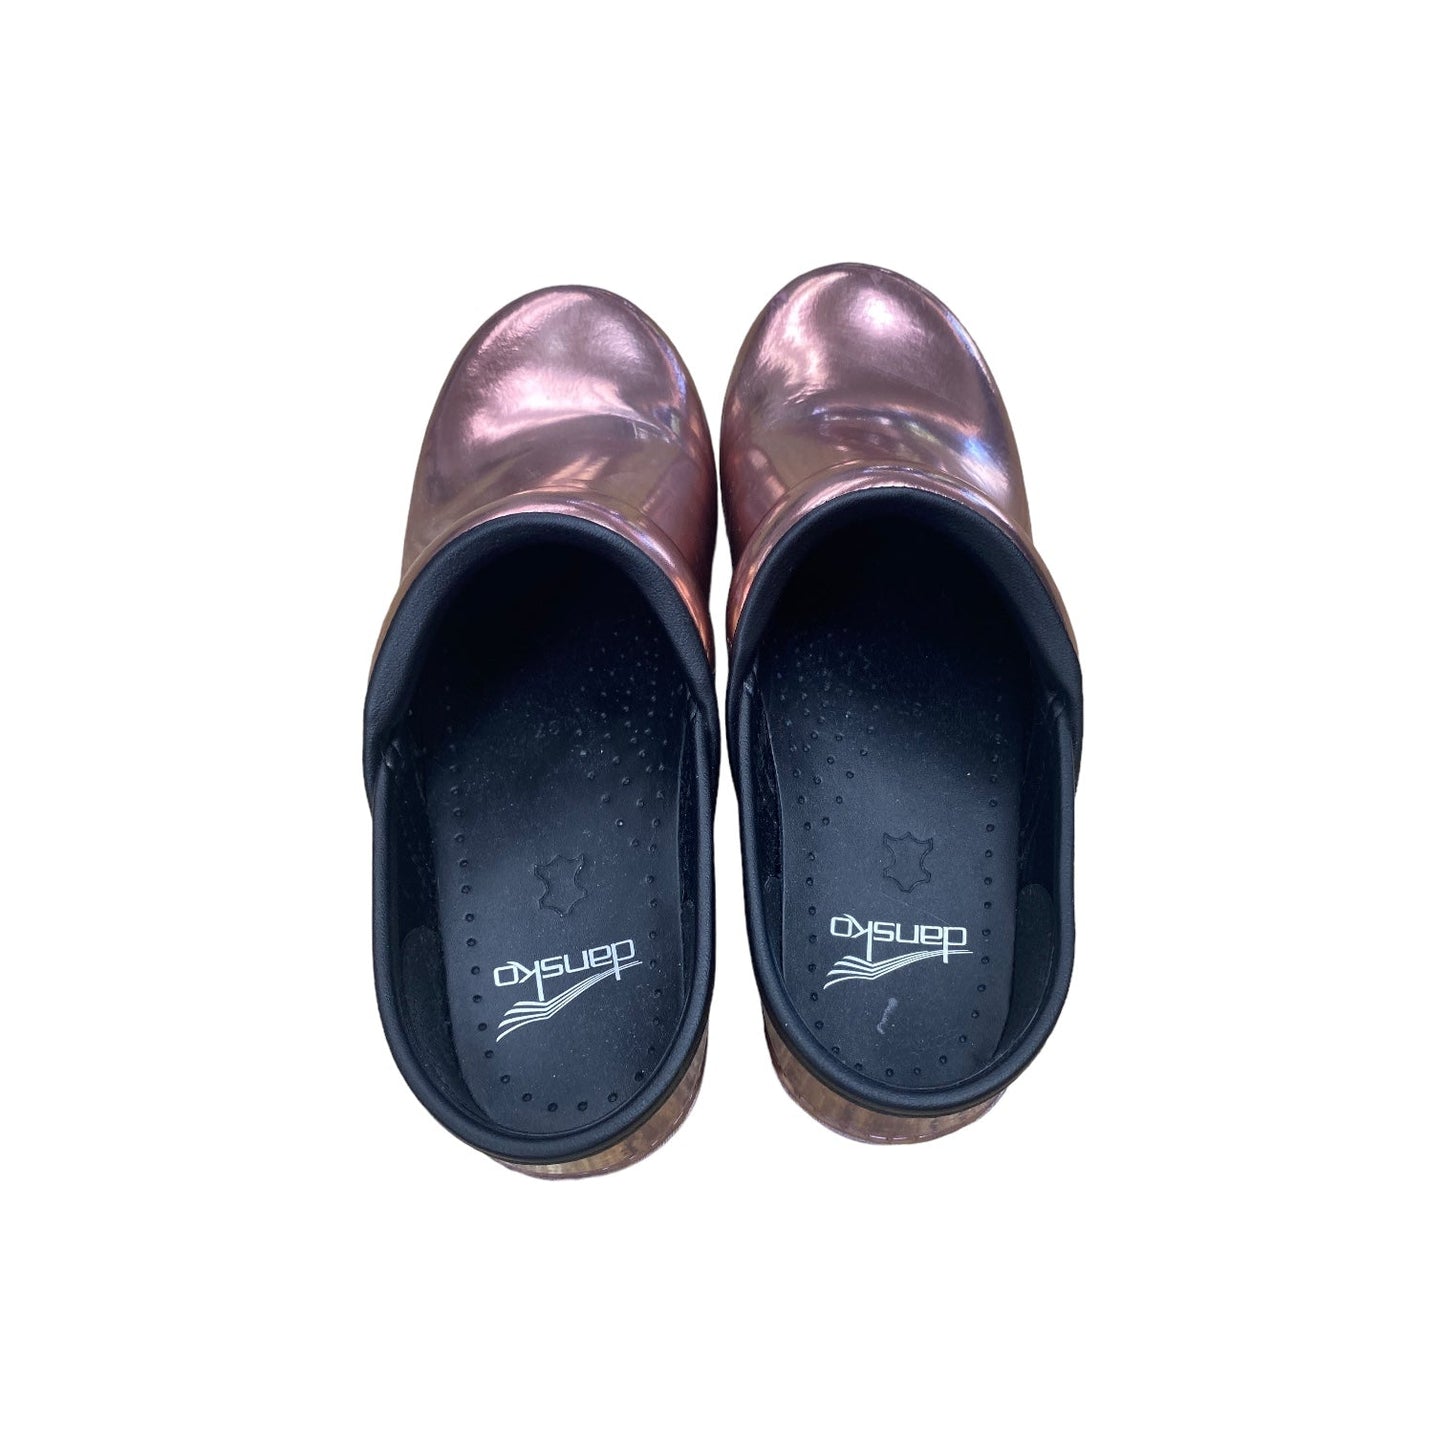 Pink Shoes Flats Dansko, Size 6.5